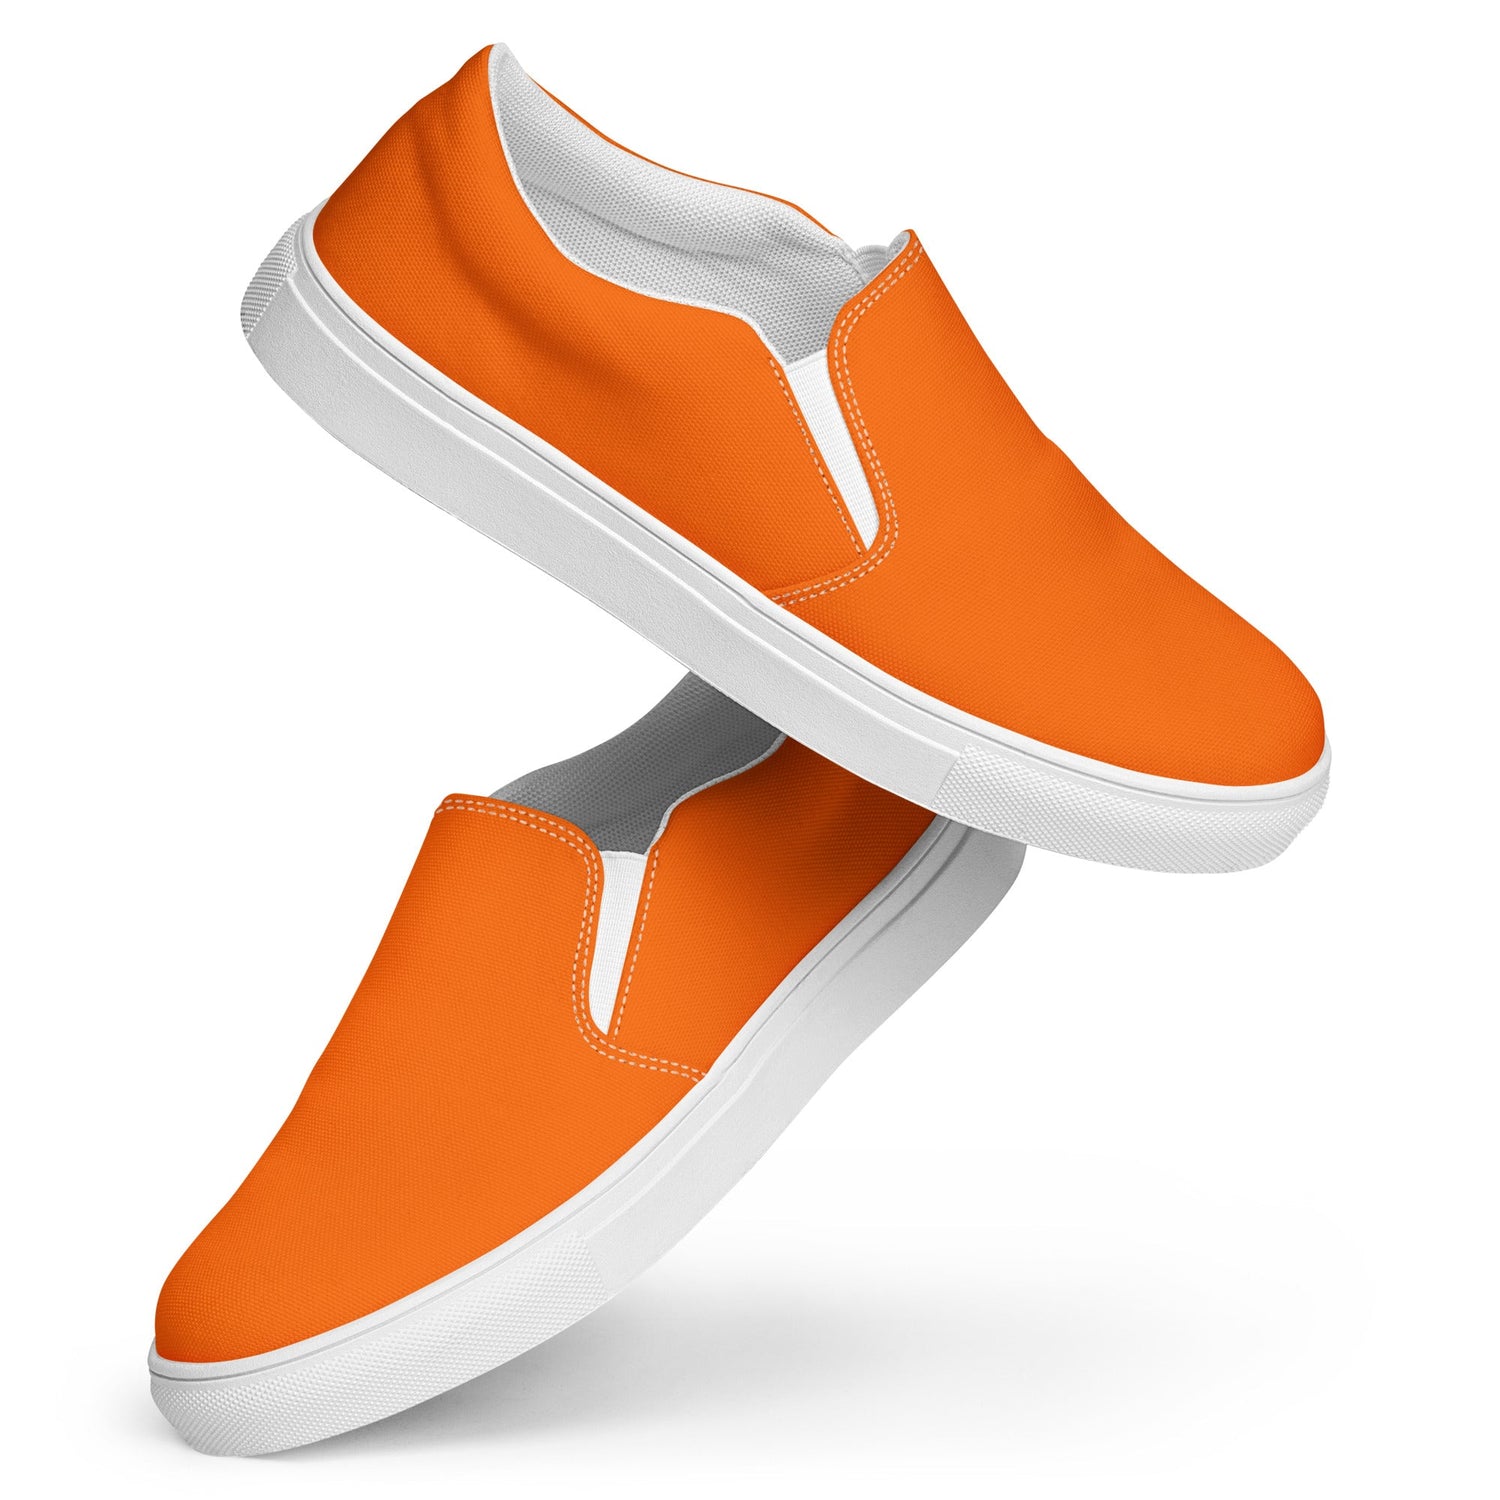 klasneakers Men’s slip-on canvas shoes - Electric Orange